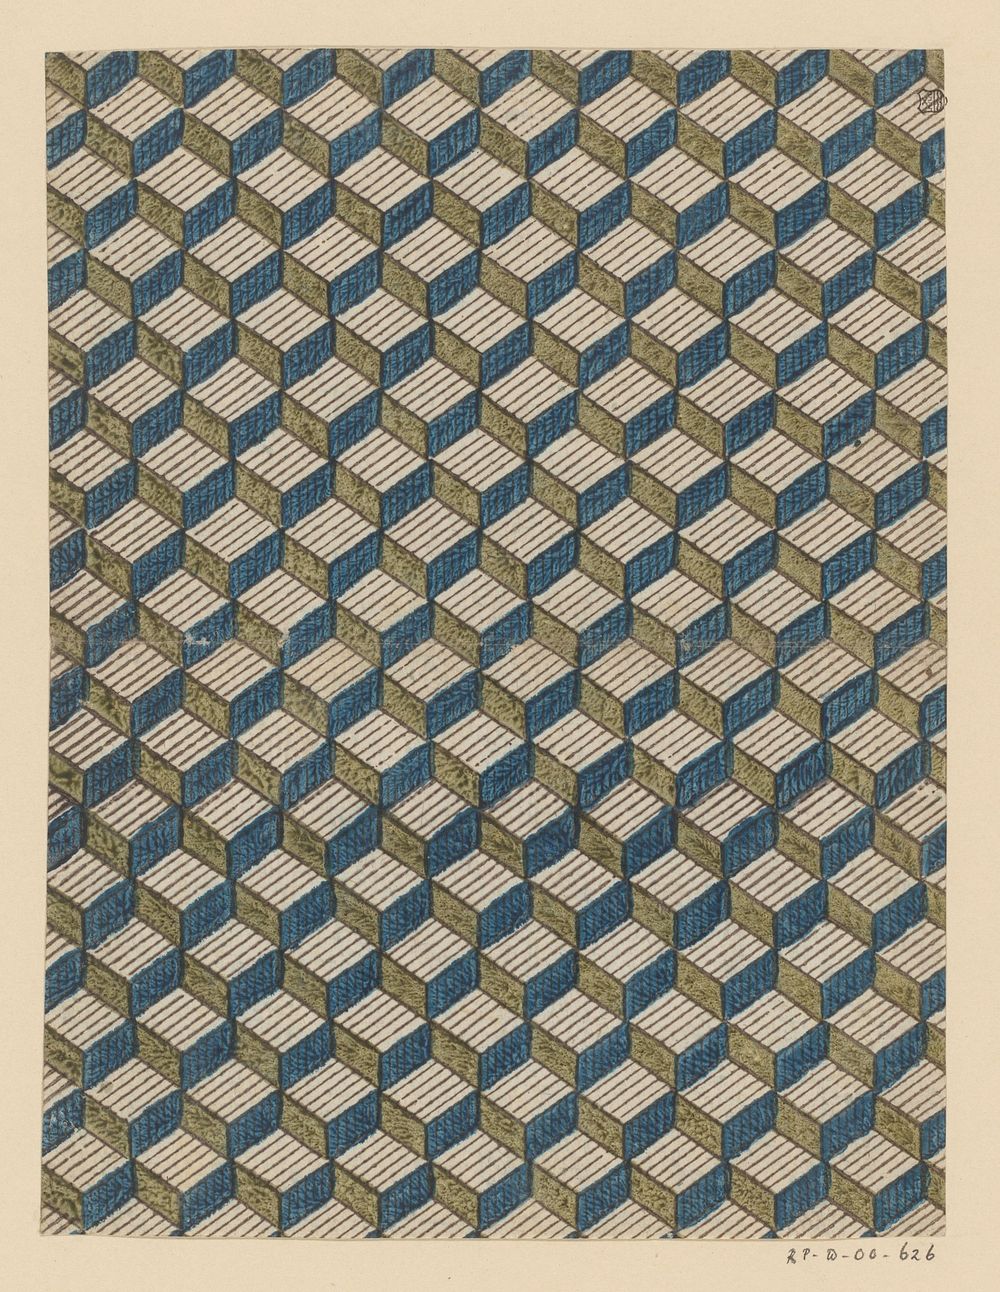 Blad met regelmatig patroon van getrapte blokjes (1800 - 1900) by anonymous